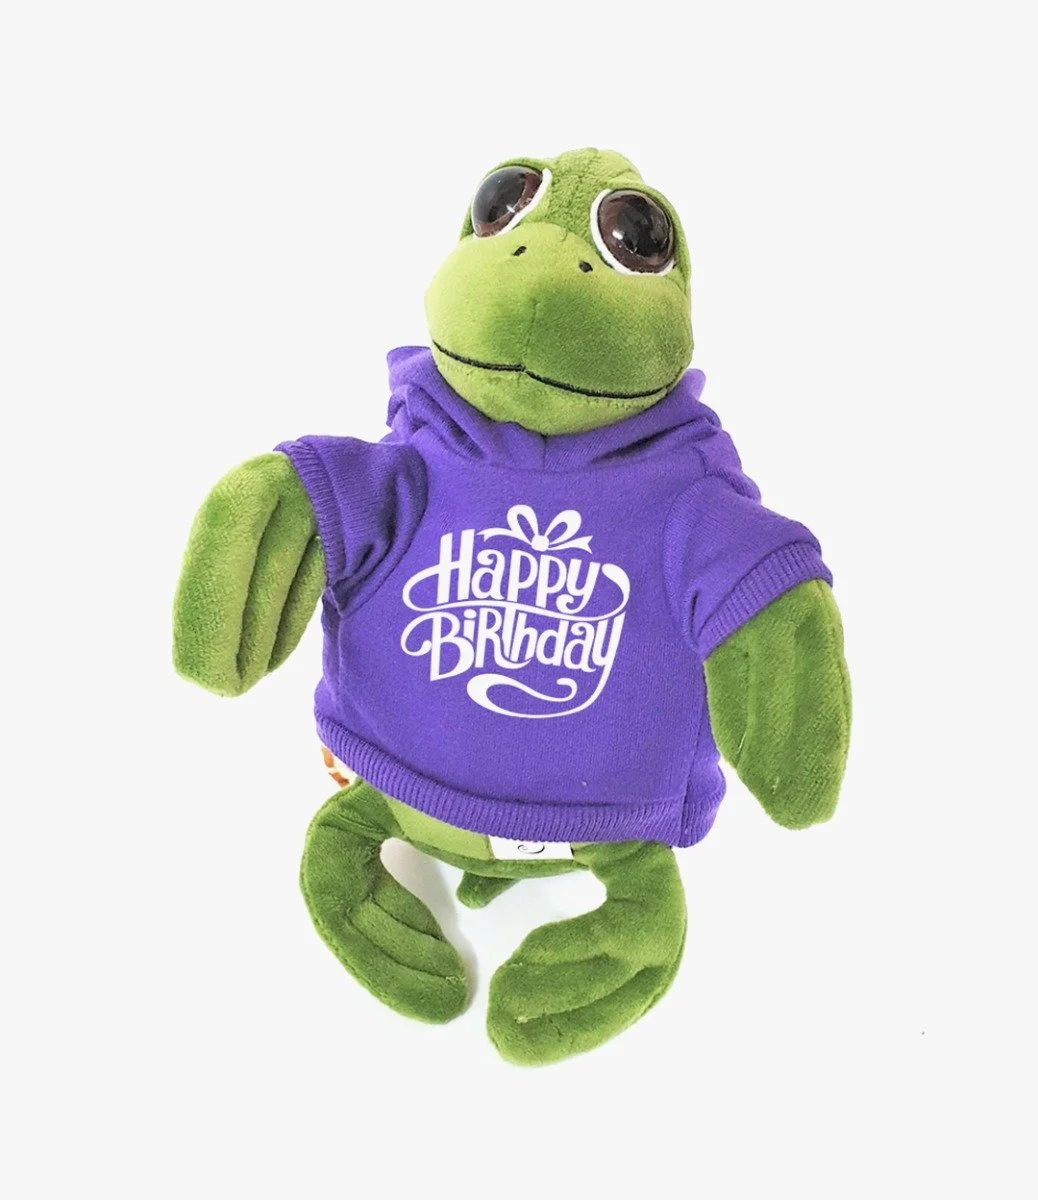 Green Turtle with Happy Birthday on Purple Hoodie 20cm